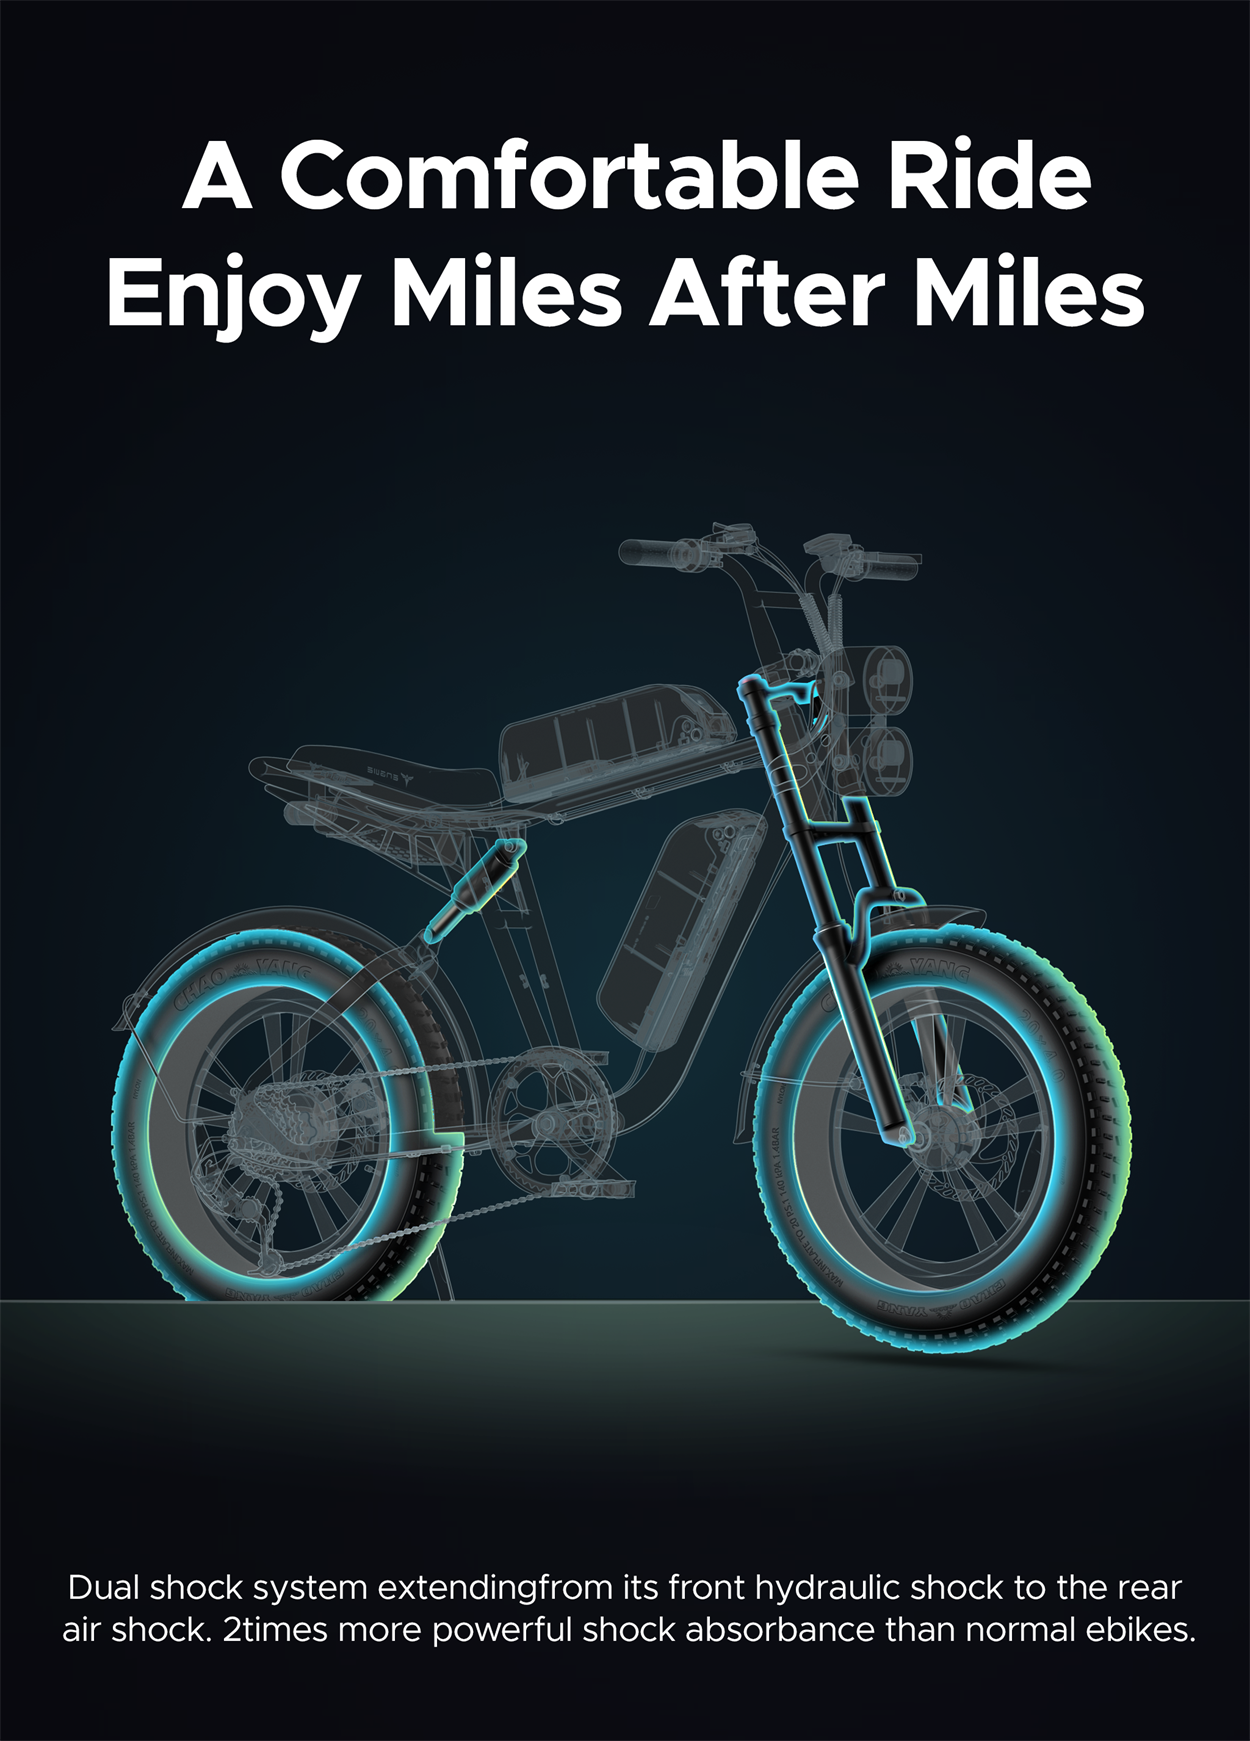 20 Zoll, ENGWE M20 Citybike Unisex-Rad, schwarz) E-Motorcycle (Laufradgröße: